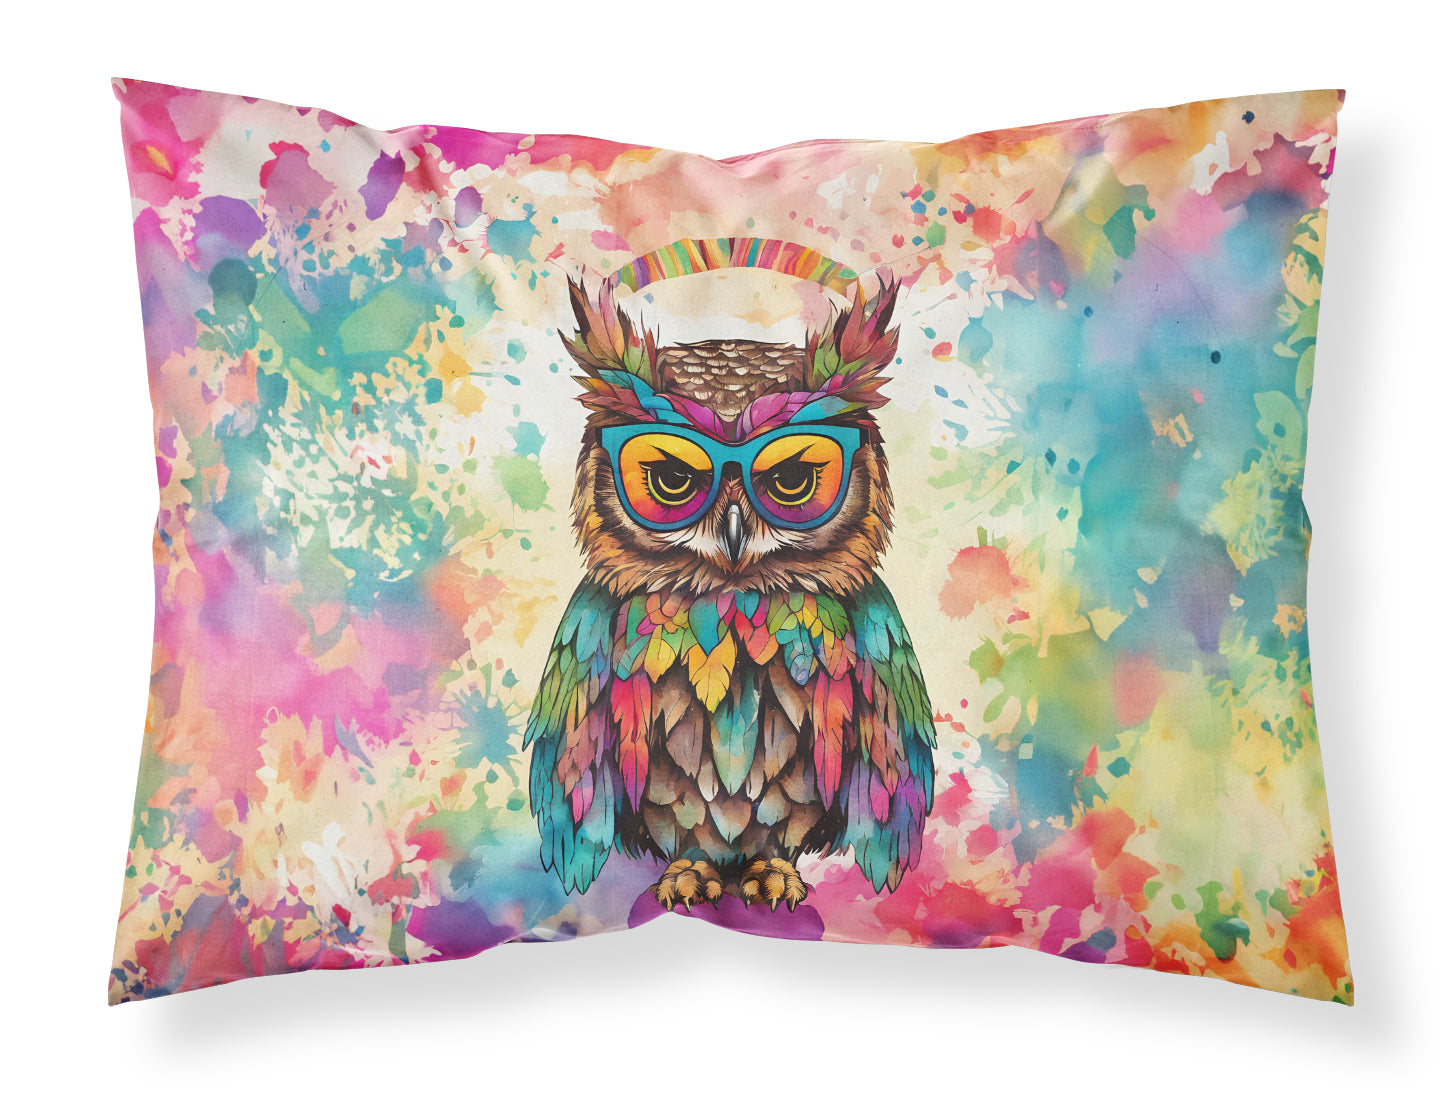 Buy this Hippie Animal Owl Standard Pillowcase